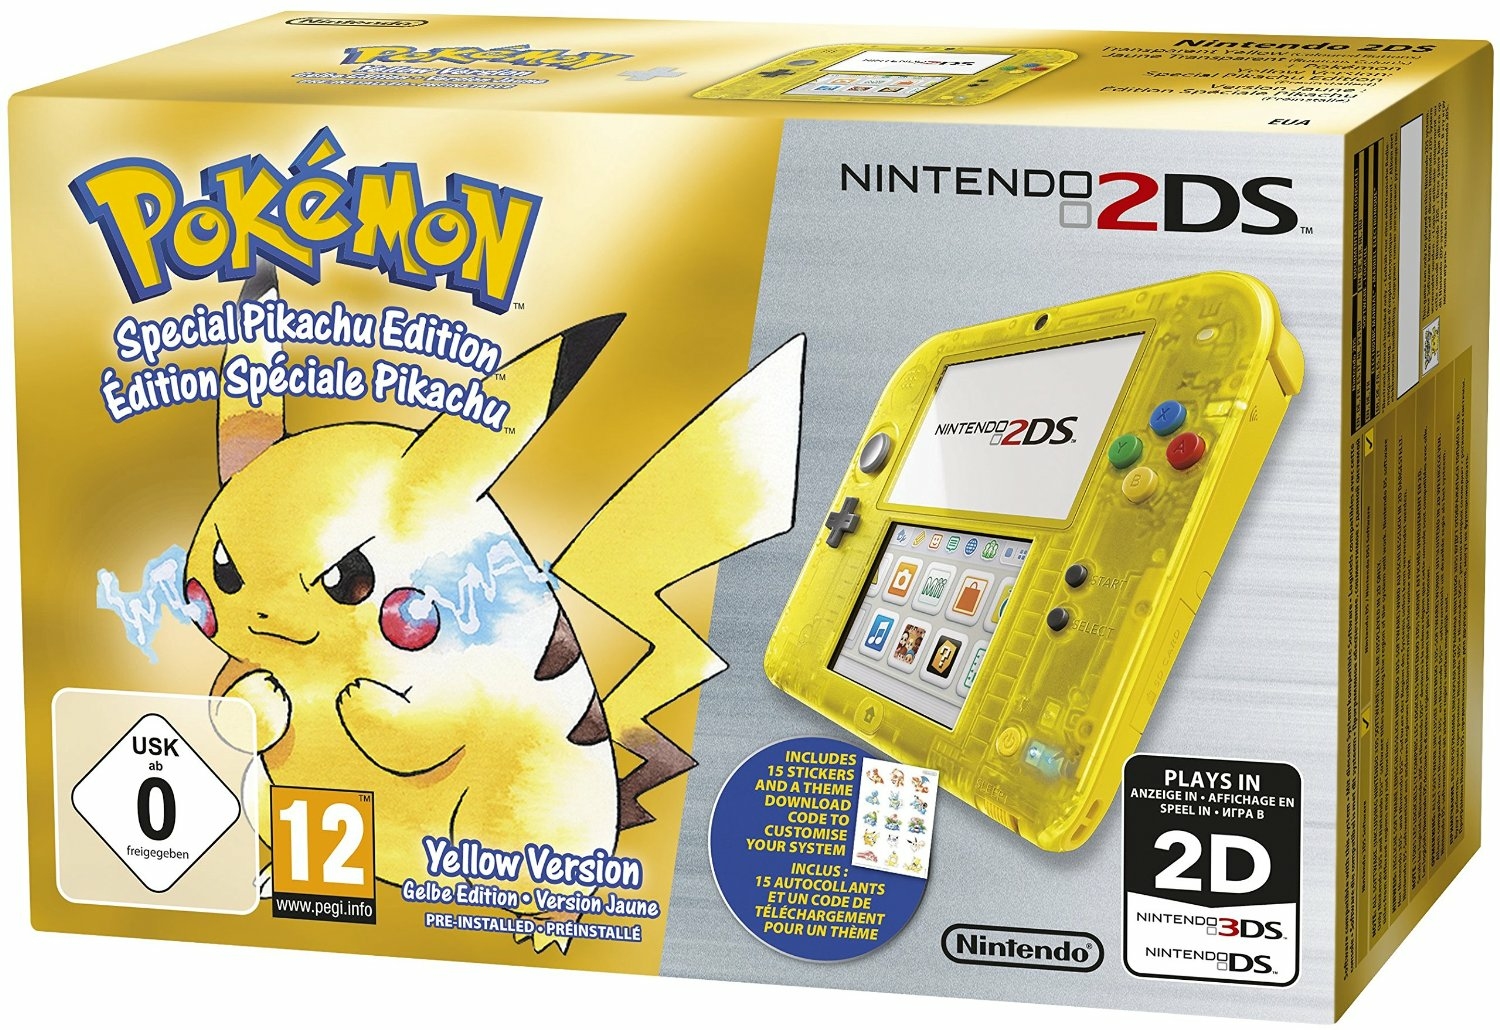 Nintendo go. Нинтендо 3дс приставка. Pokemon Pikachu Nintendo игровая приставка. Nintendo 2ds Pokemon Edition. Nintendo 2ds Yellow.